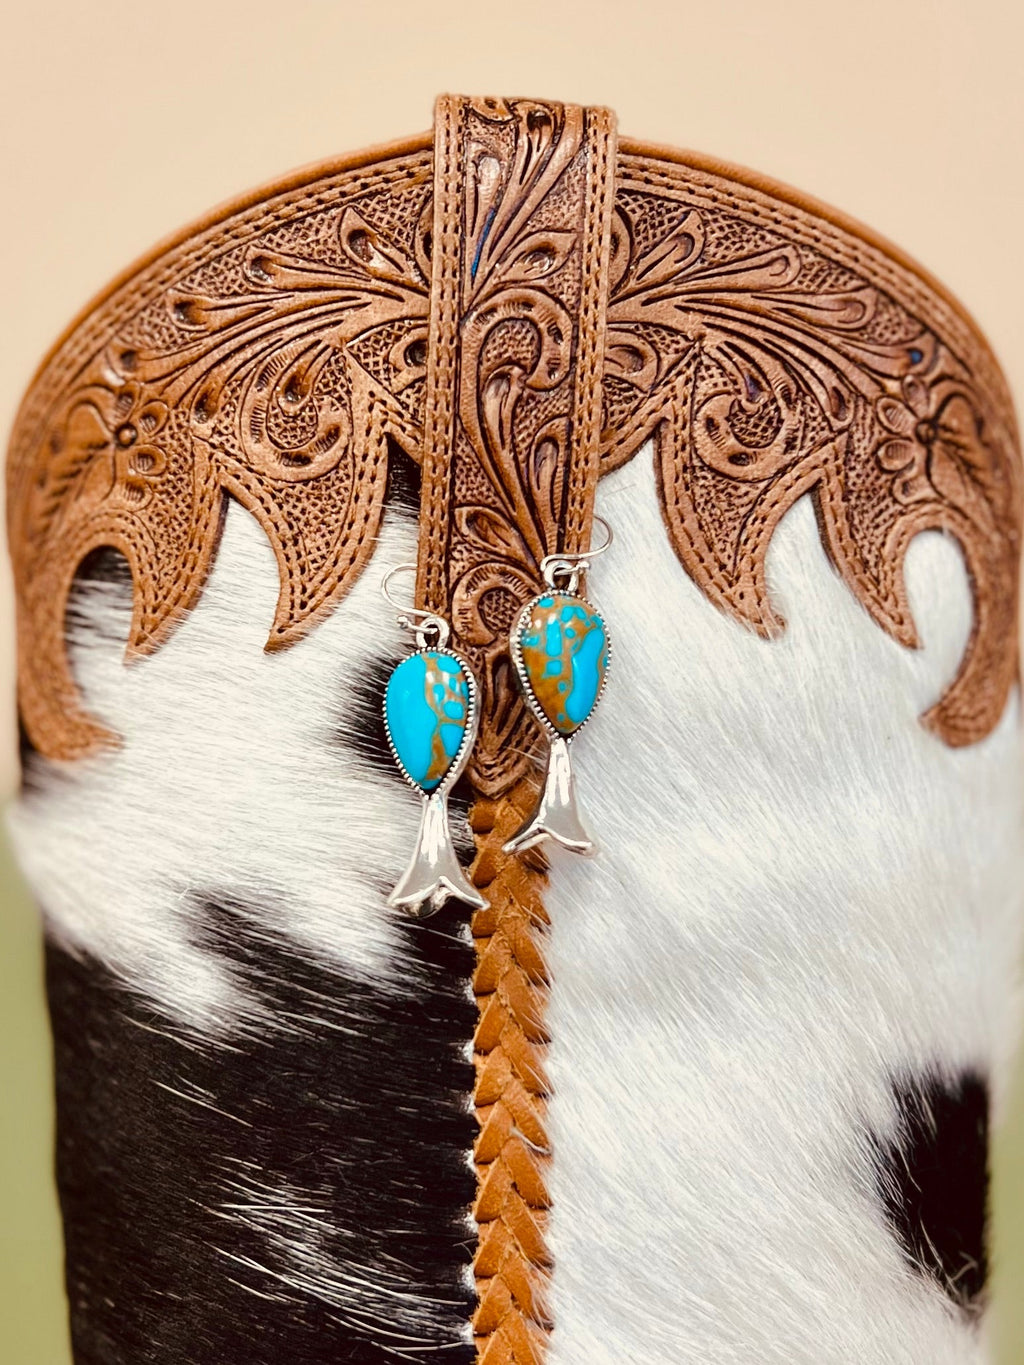 Turquoise Country Earrings | gussieduponline